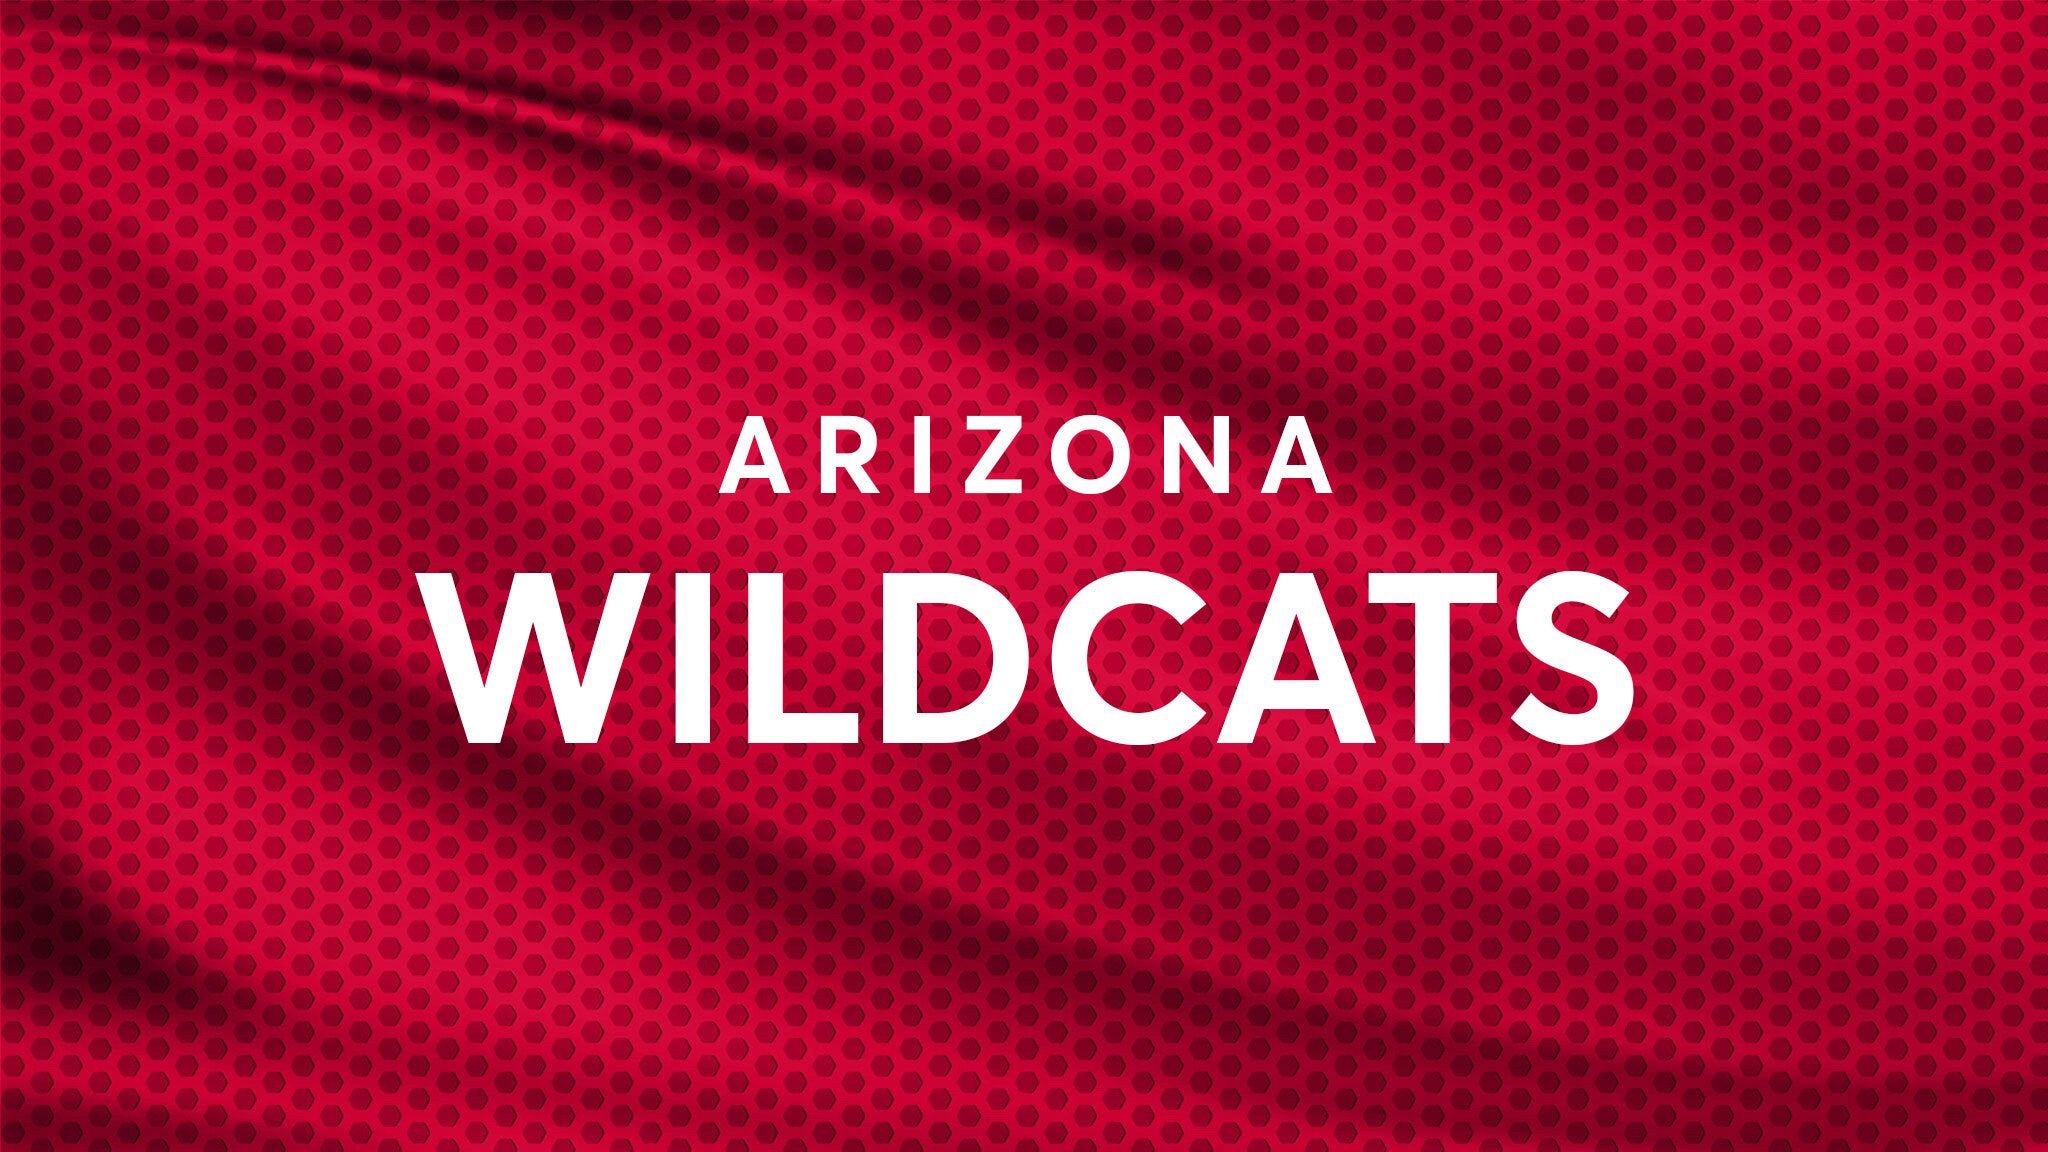 Arizona Wildcats Football vs. West Virginia Mountaineers Football hero